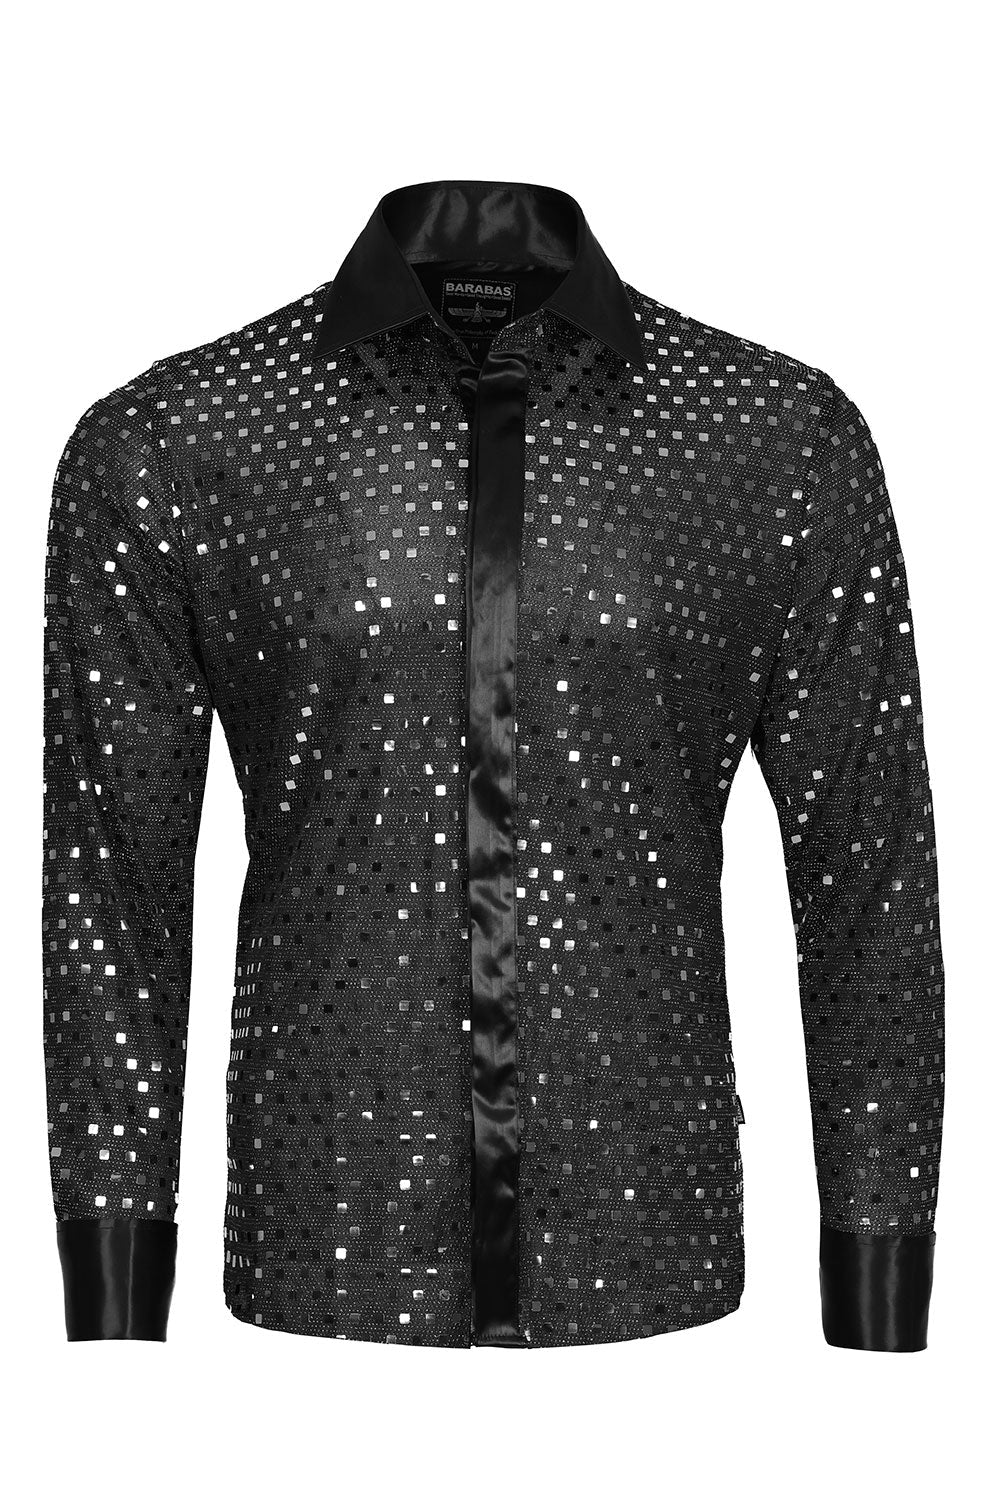 Barabas Men's French Cuff Glittery Sparkly Striped Shirt 2FCS1007 Black